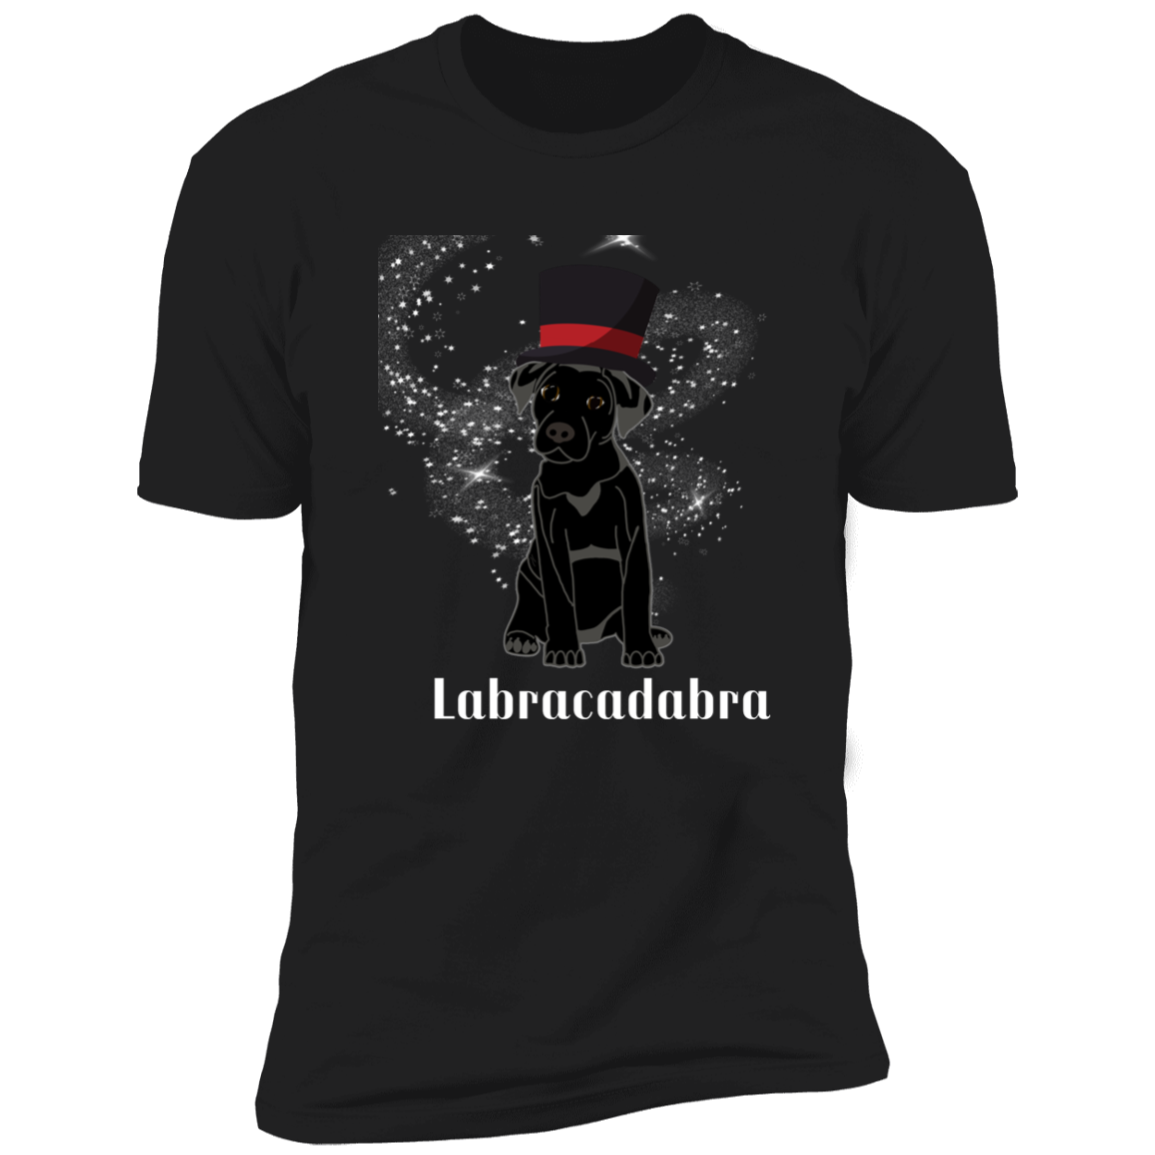 Labracadabra funny dog shirt, funny dog shirt for humans, funny labrador shirt. in black